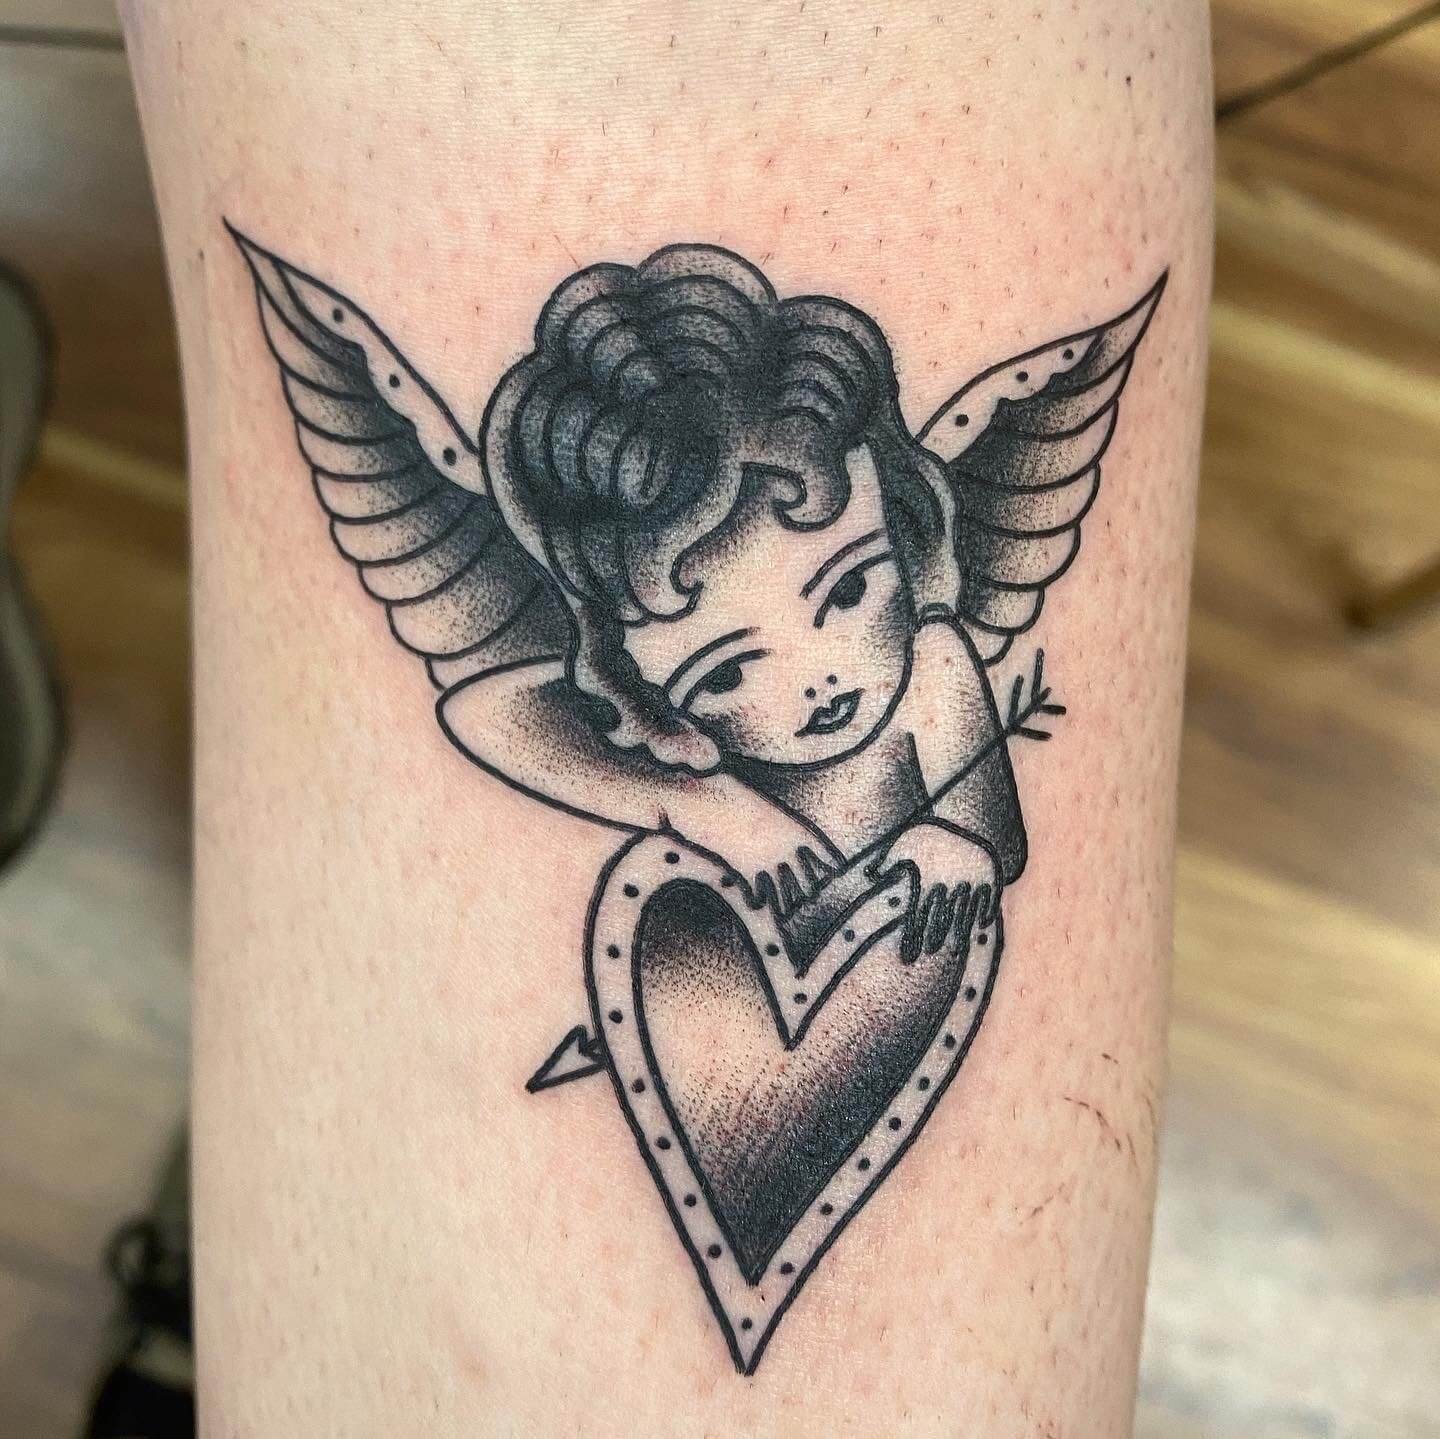 Heart Shaped Angel Wings Tattoo - Tattoo Ideas and Designs | Tattoos.ai